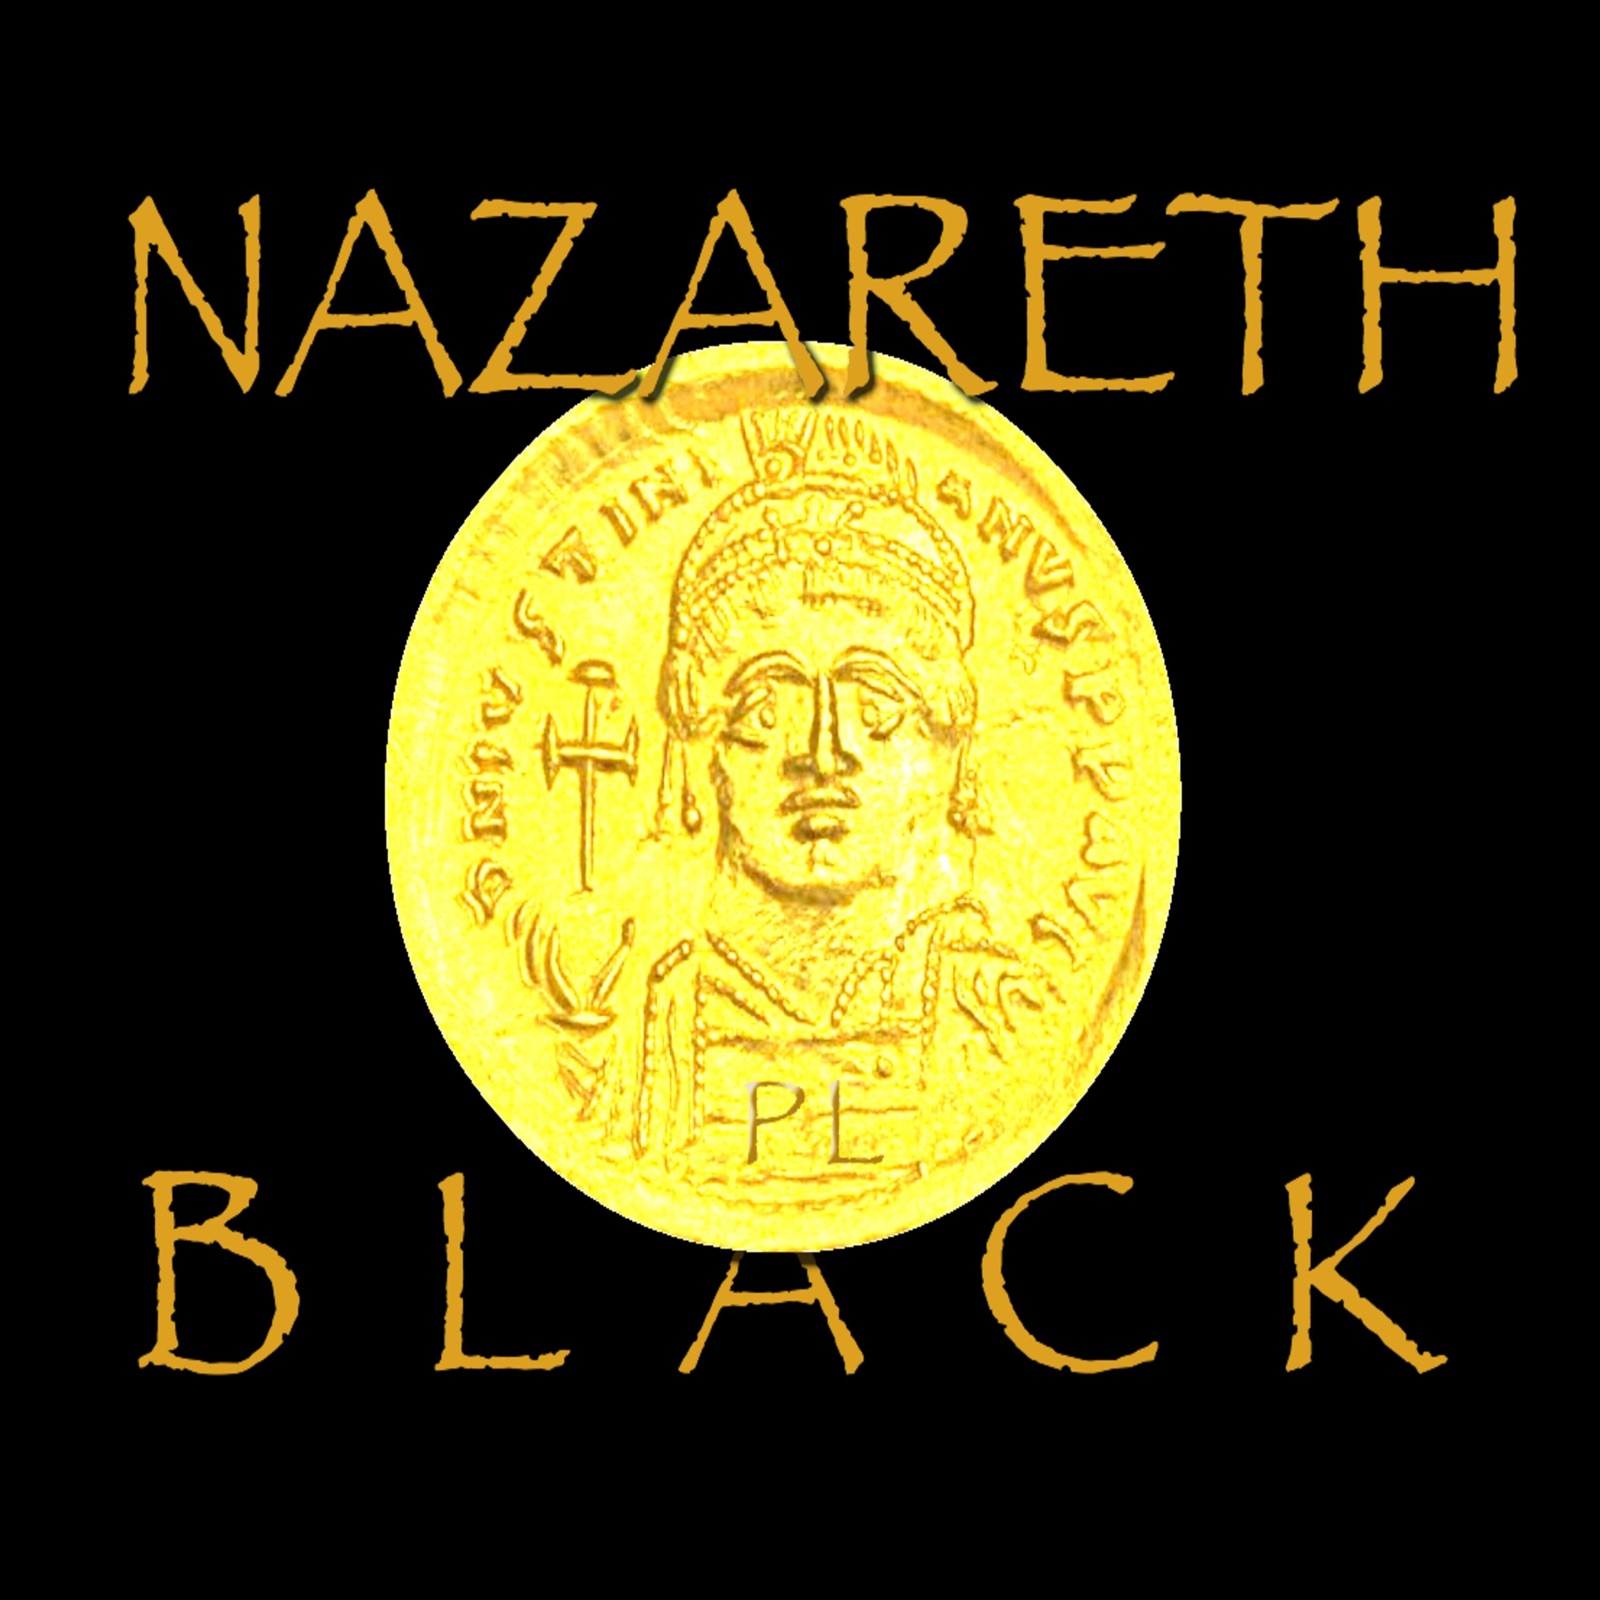 Nazareth Black